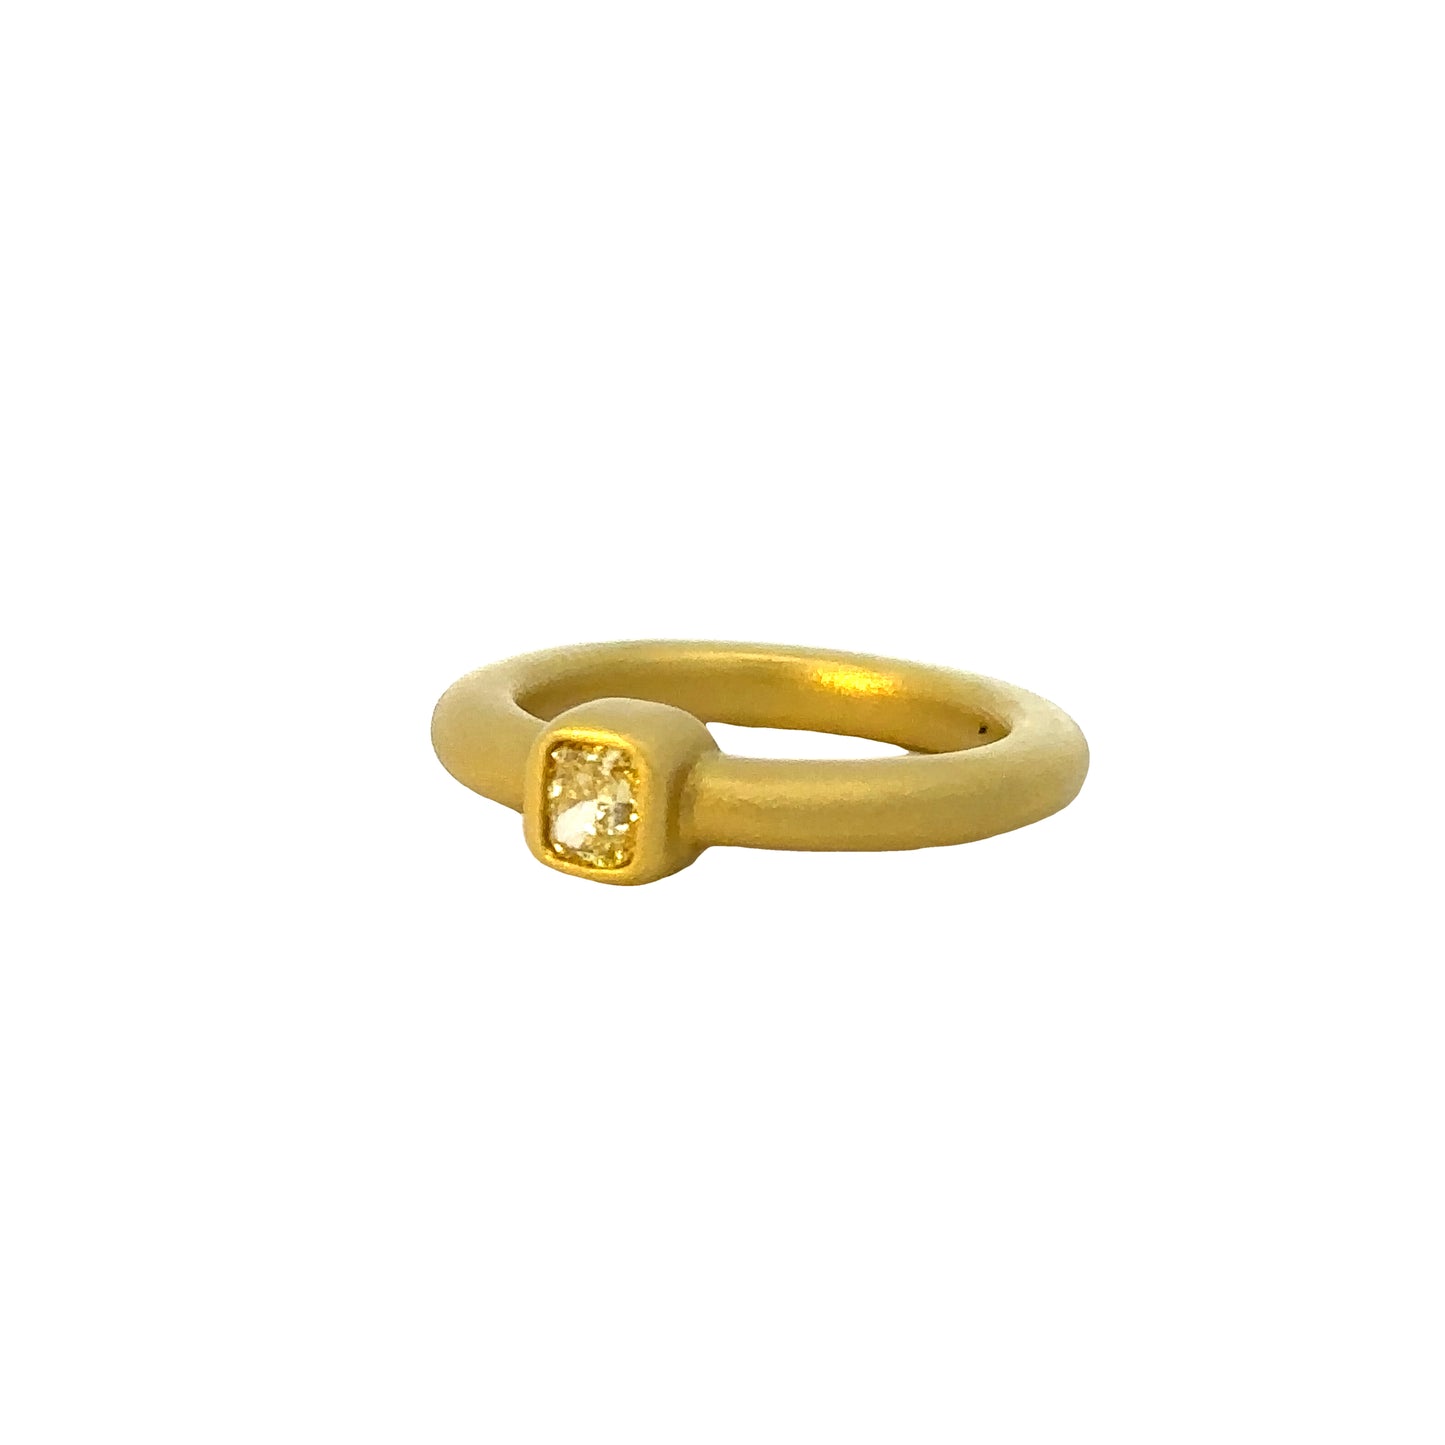 jewl // 004 - one of a kind ring - yellow diamond